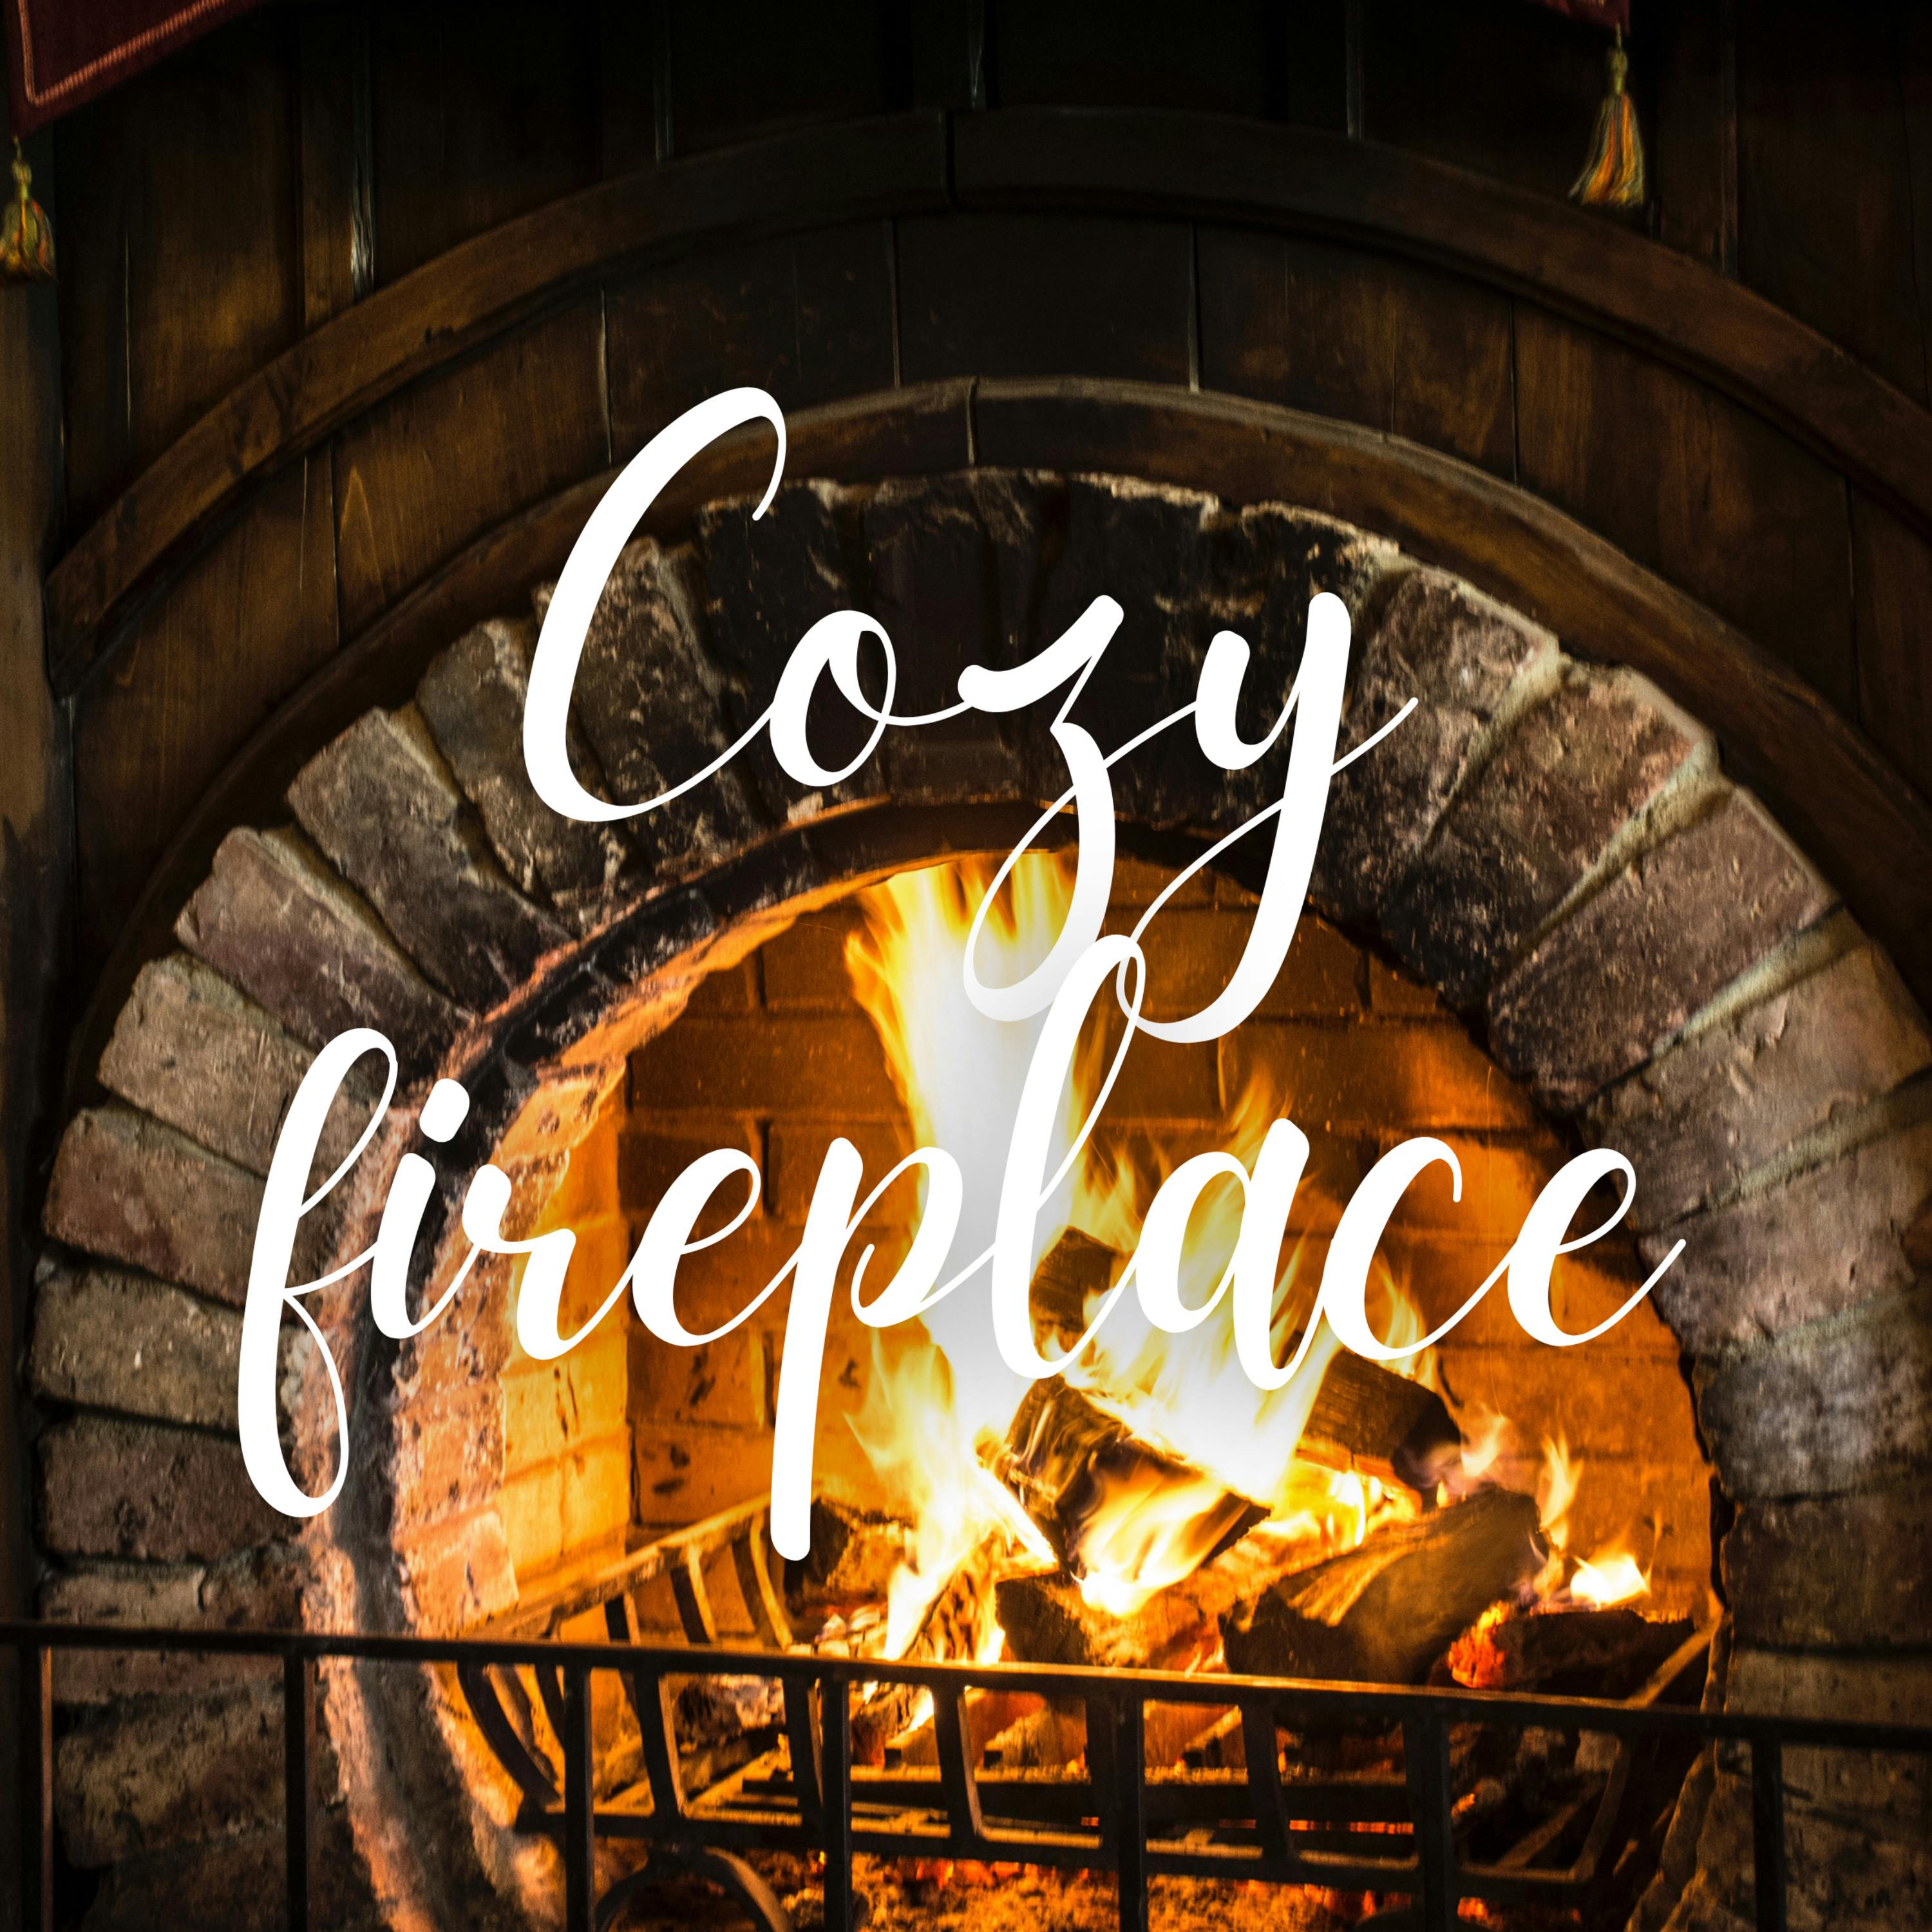 Fireplace Sounds - Cozy Crackling Fire Sounds